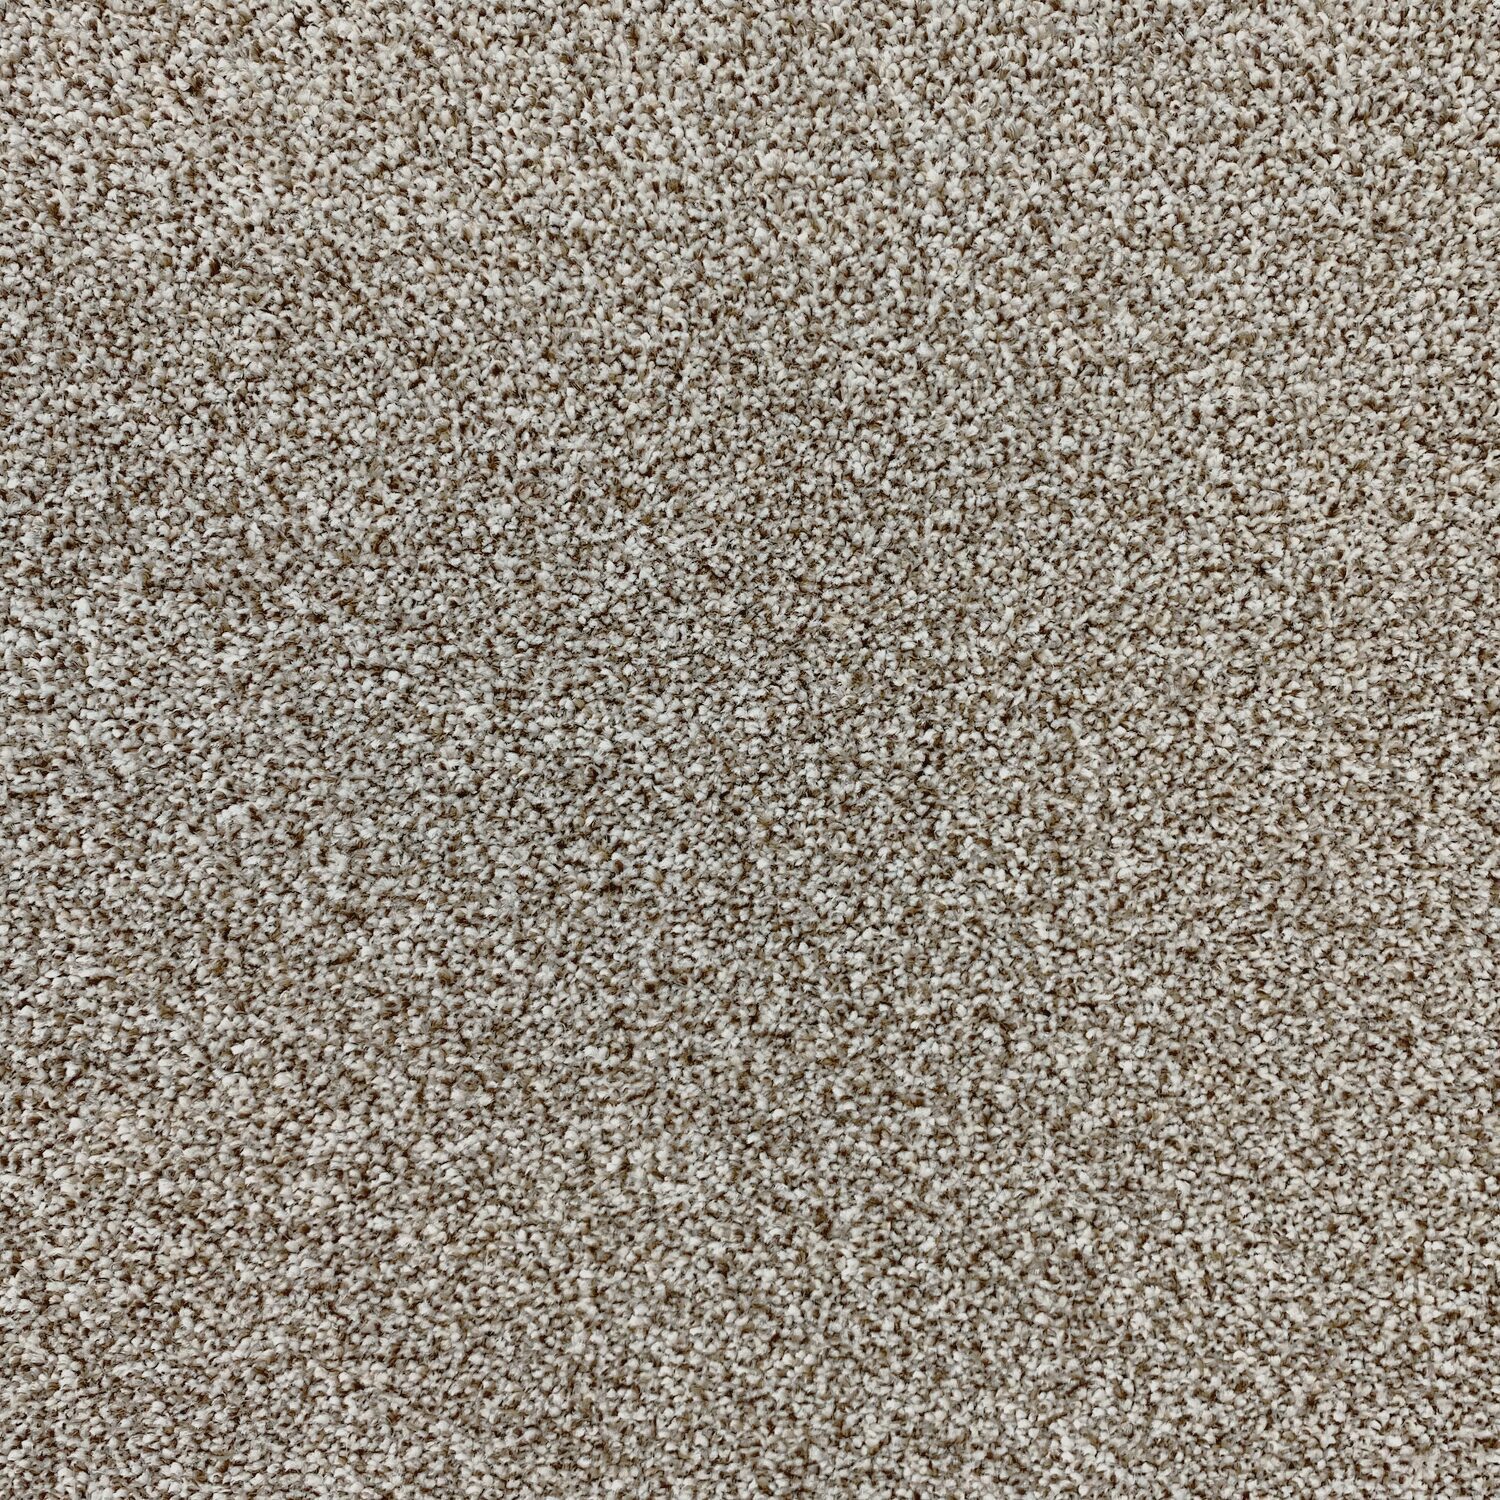 Carpet name: Smart Textures Hazel